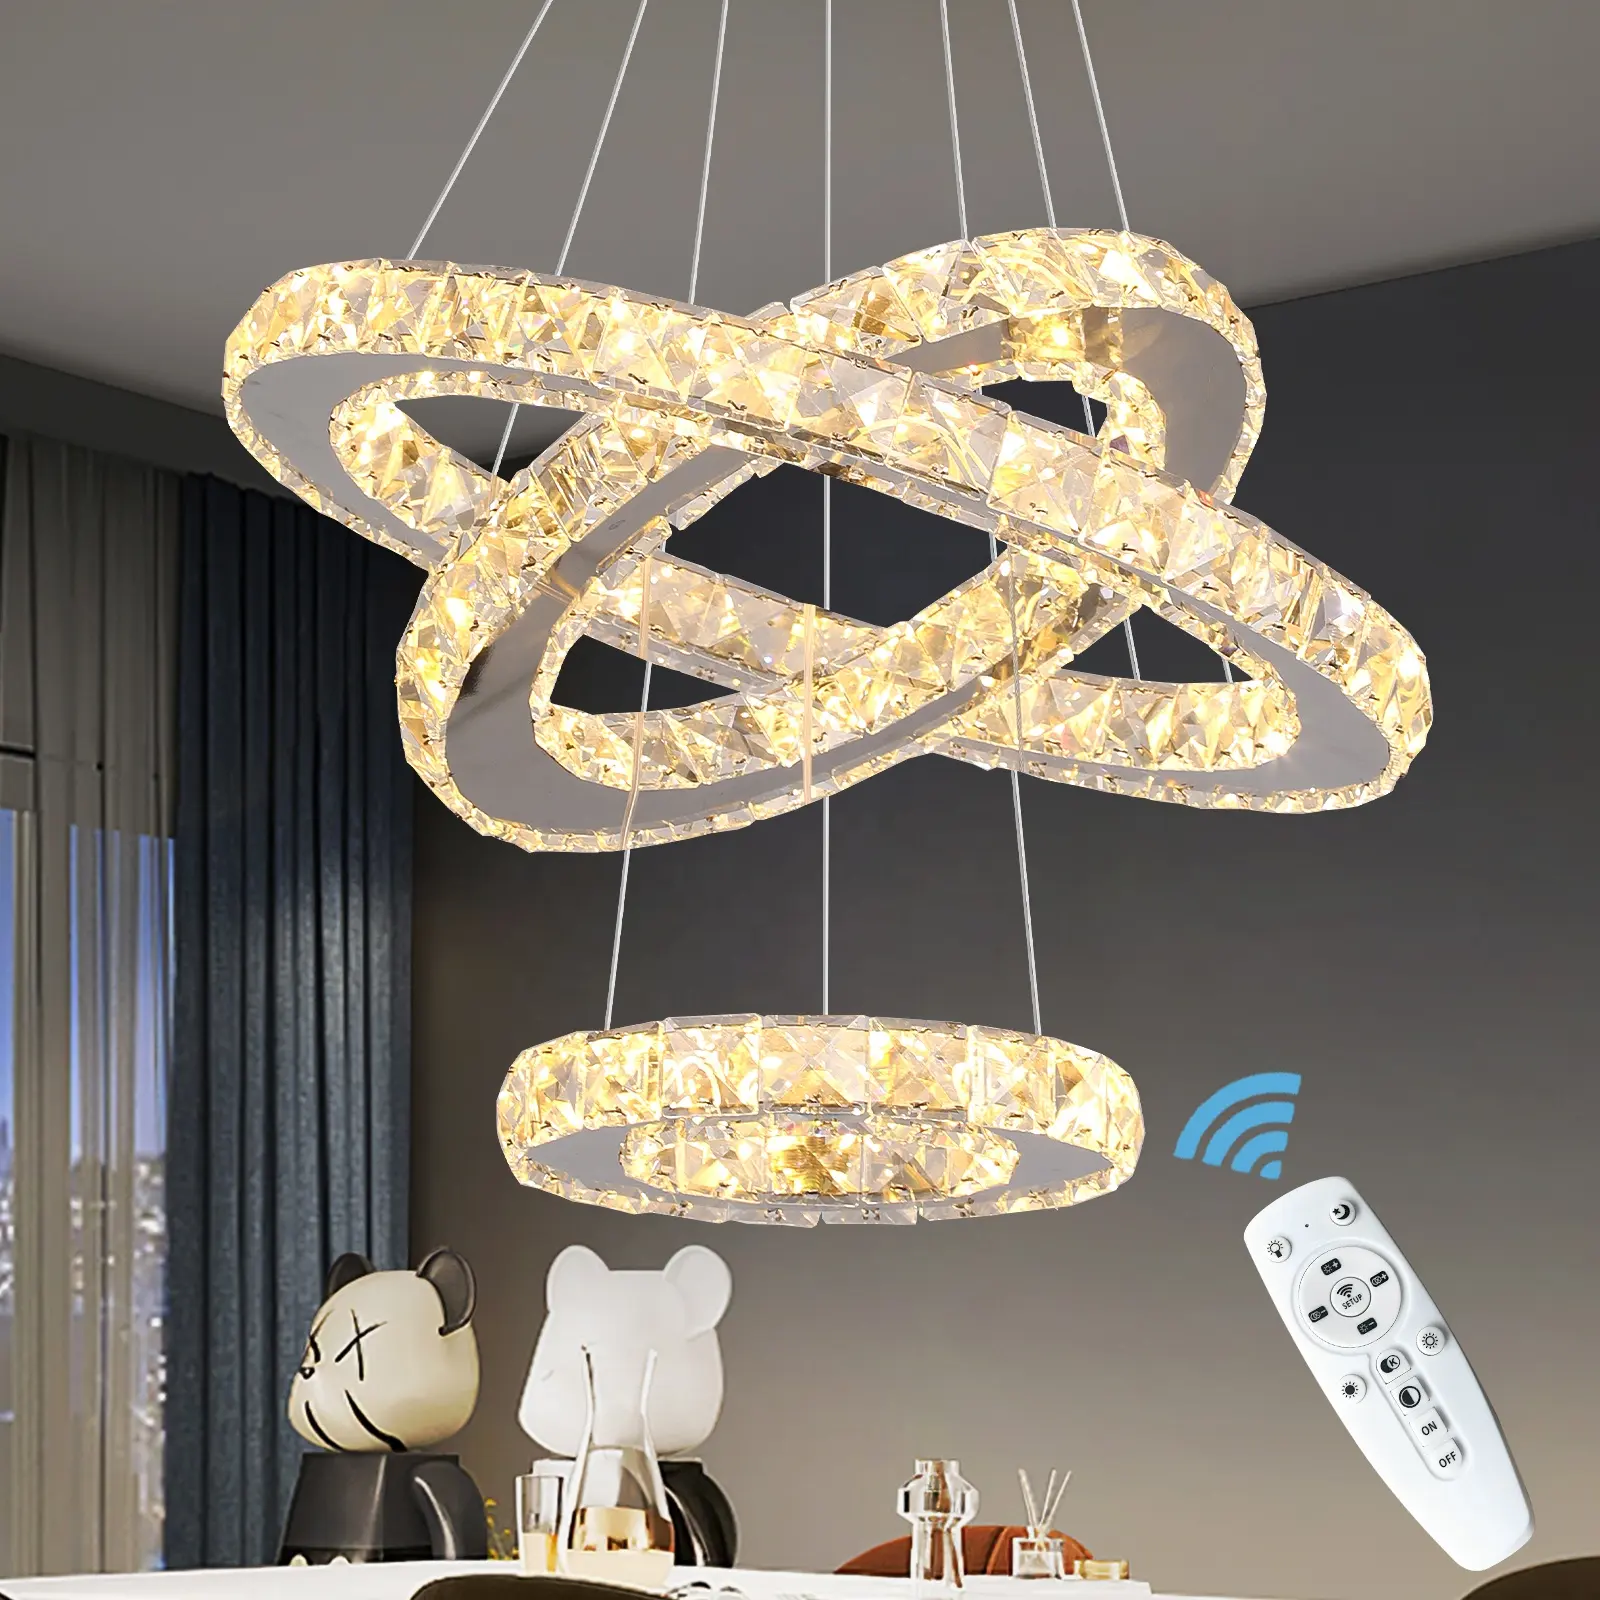 Lámparas colgantes de iluminación de cristal para hoteles de 47W, candelabros de 3 anillos remotos modernos para el hogar y luces colgantes